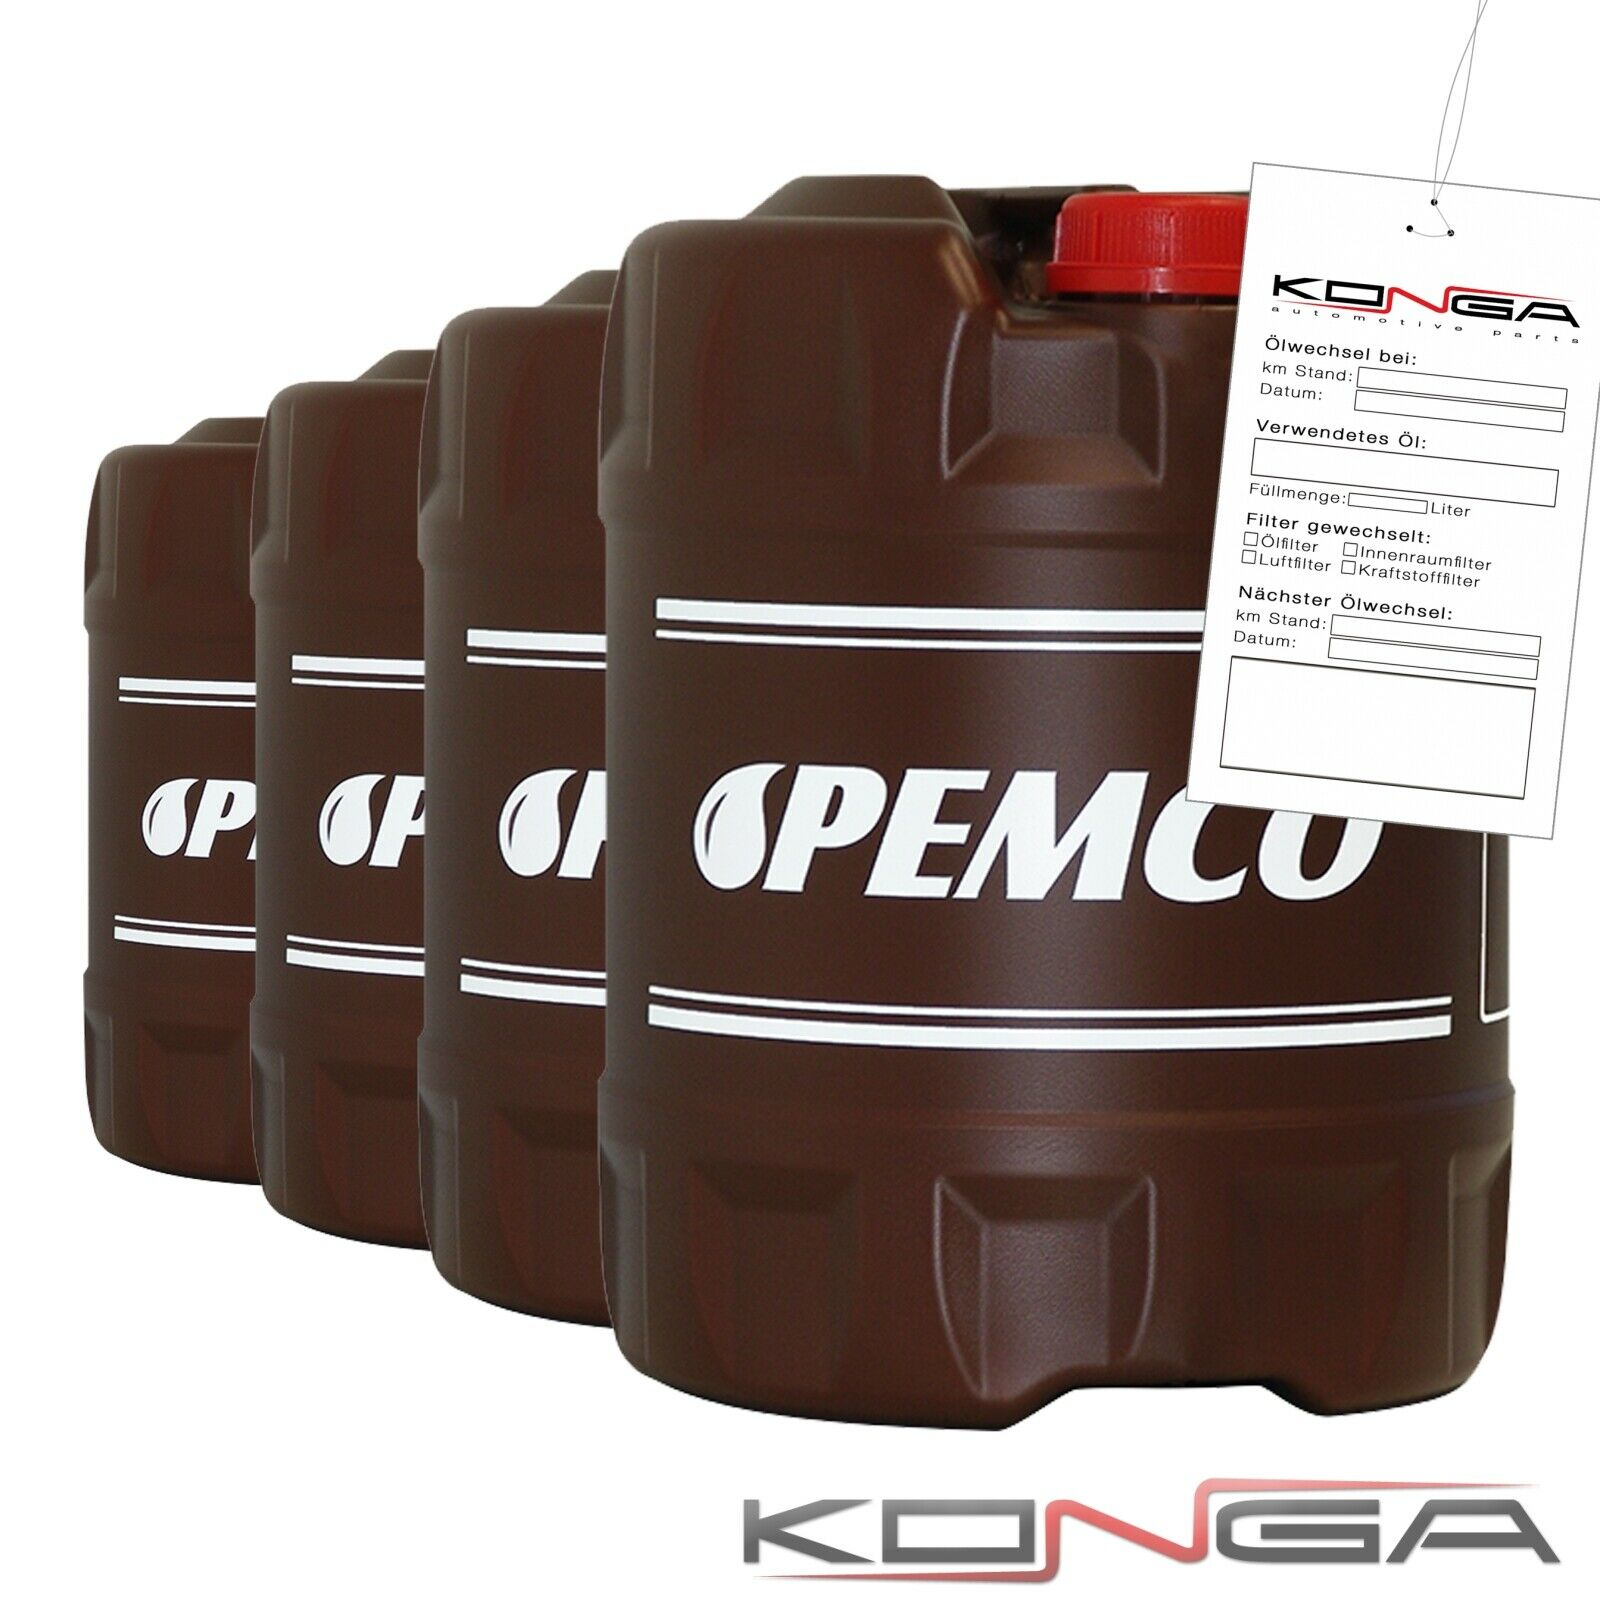 40 Liter PEMCO Hydro ISO HLP 32 Hydrauliköl Öl Hebebühne DIN 51524/2 VDMA 2431